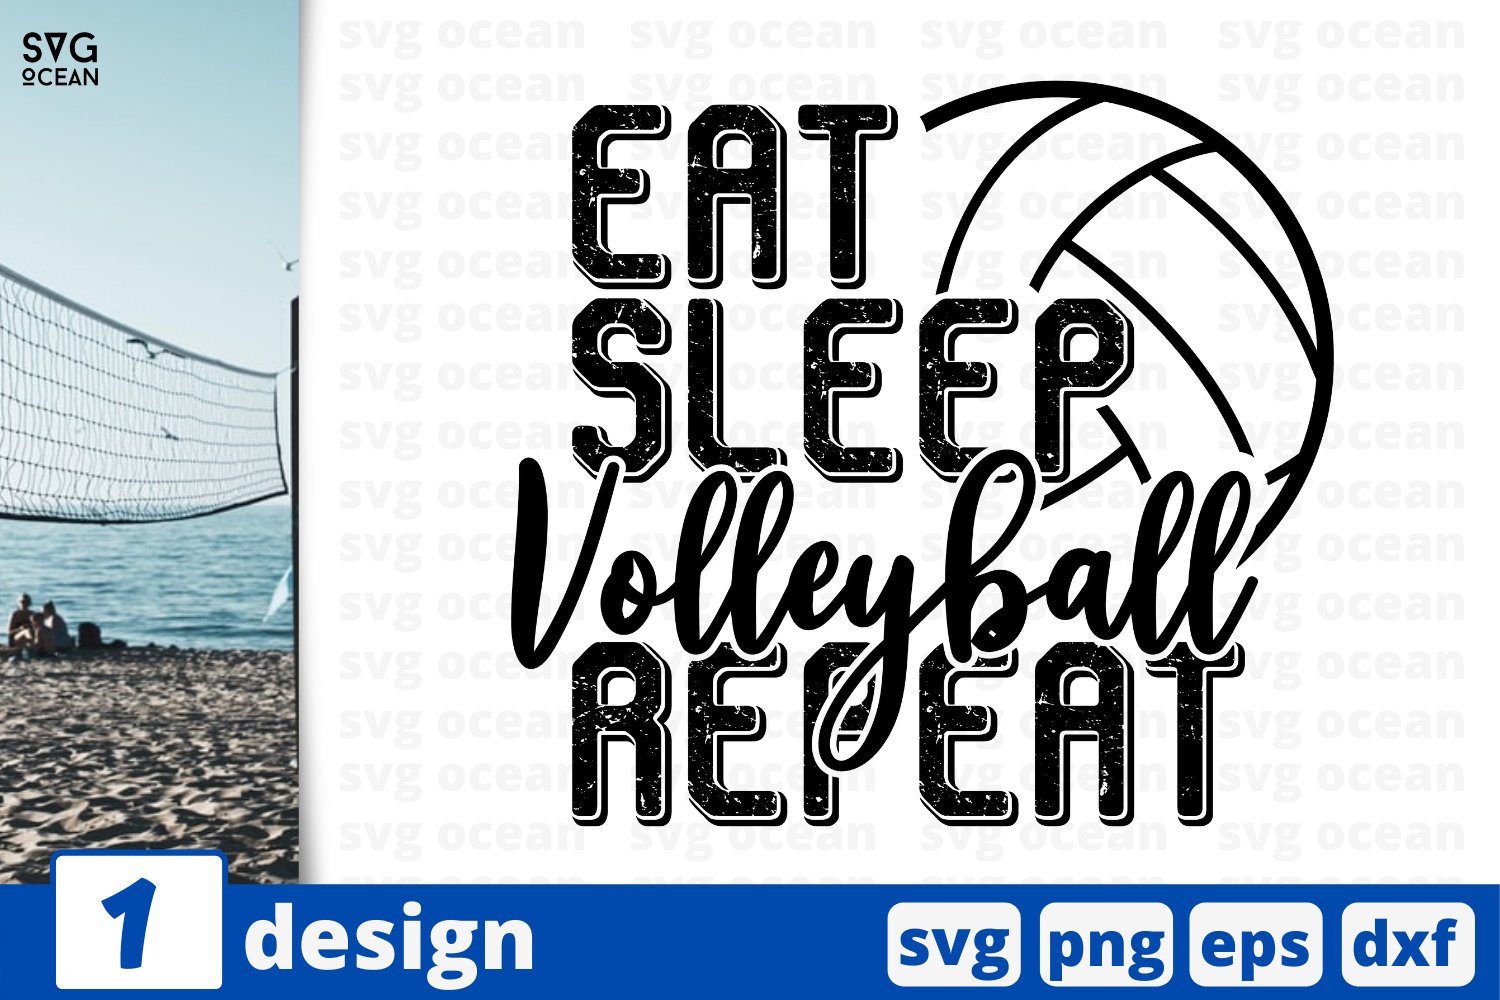 Eat Sleep Volleyball Repeat design.